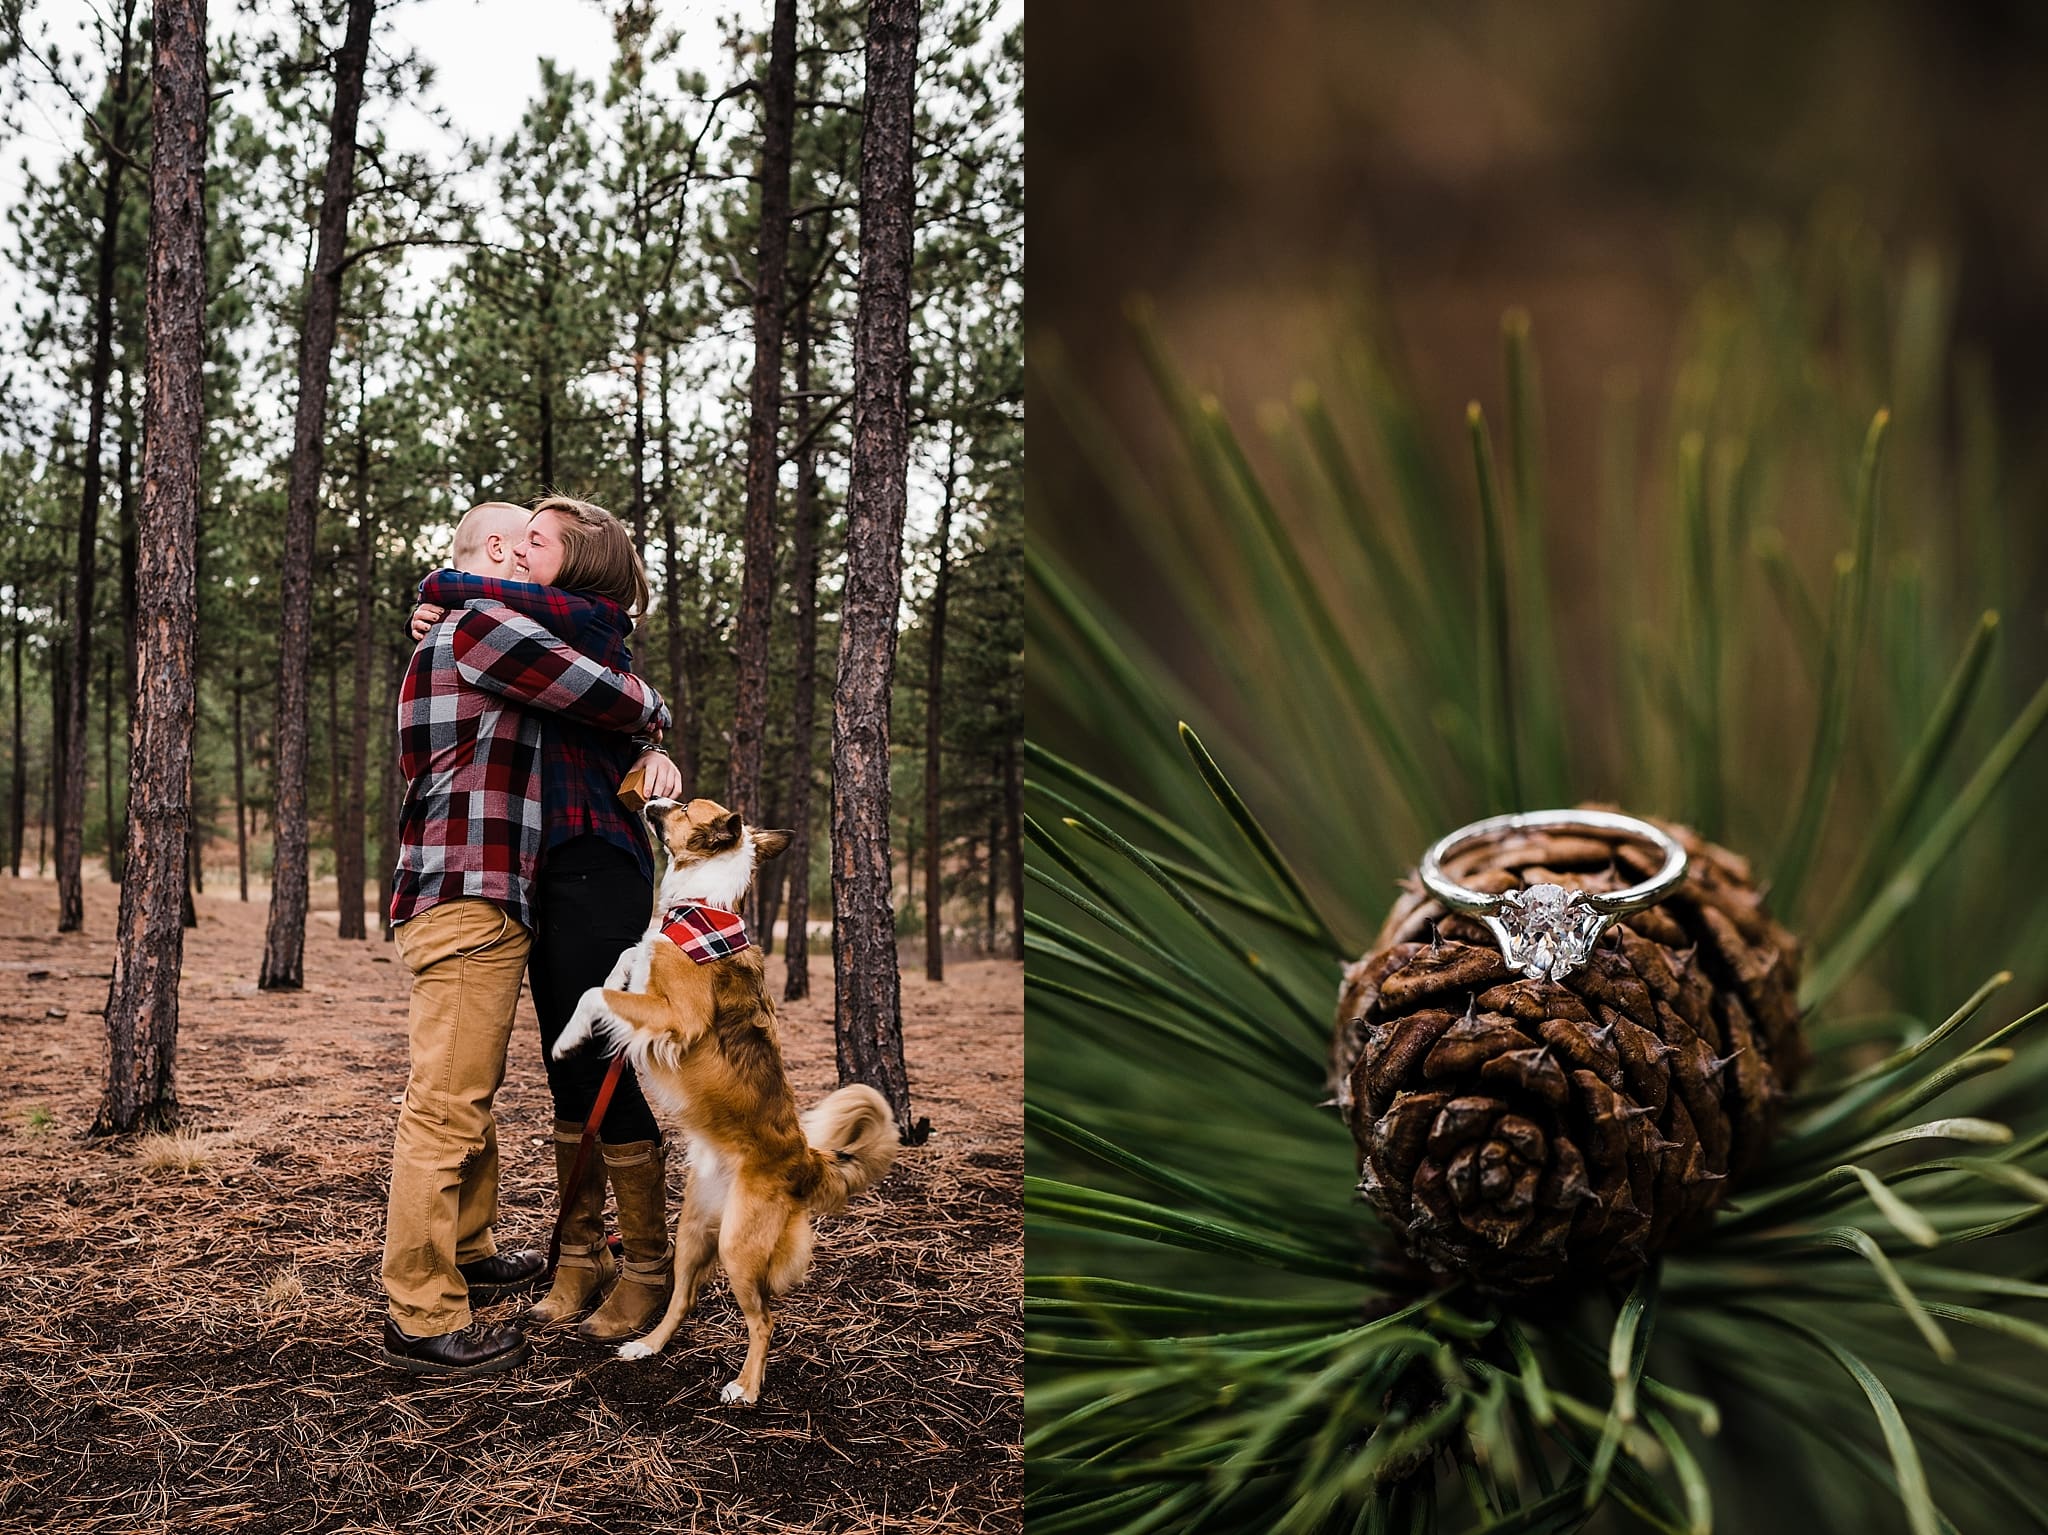 Surprise Proposal at Fox Run Park in Colorado Springs